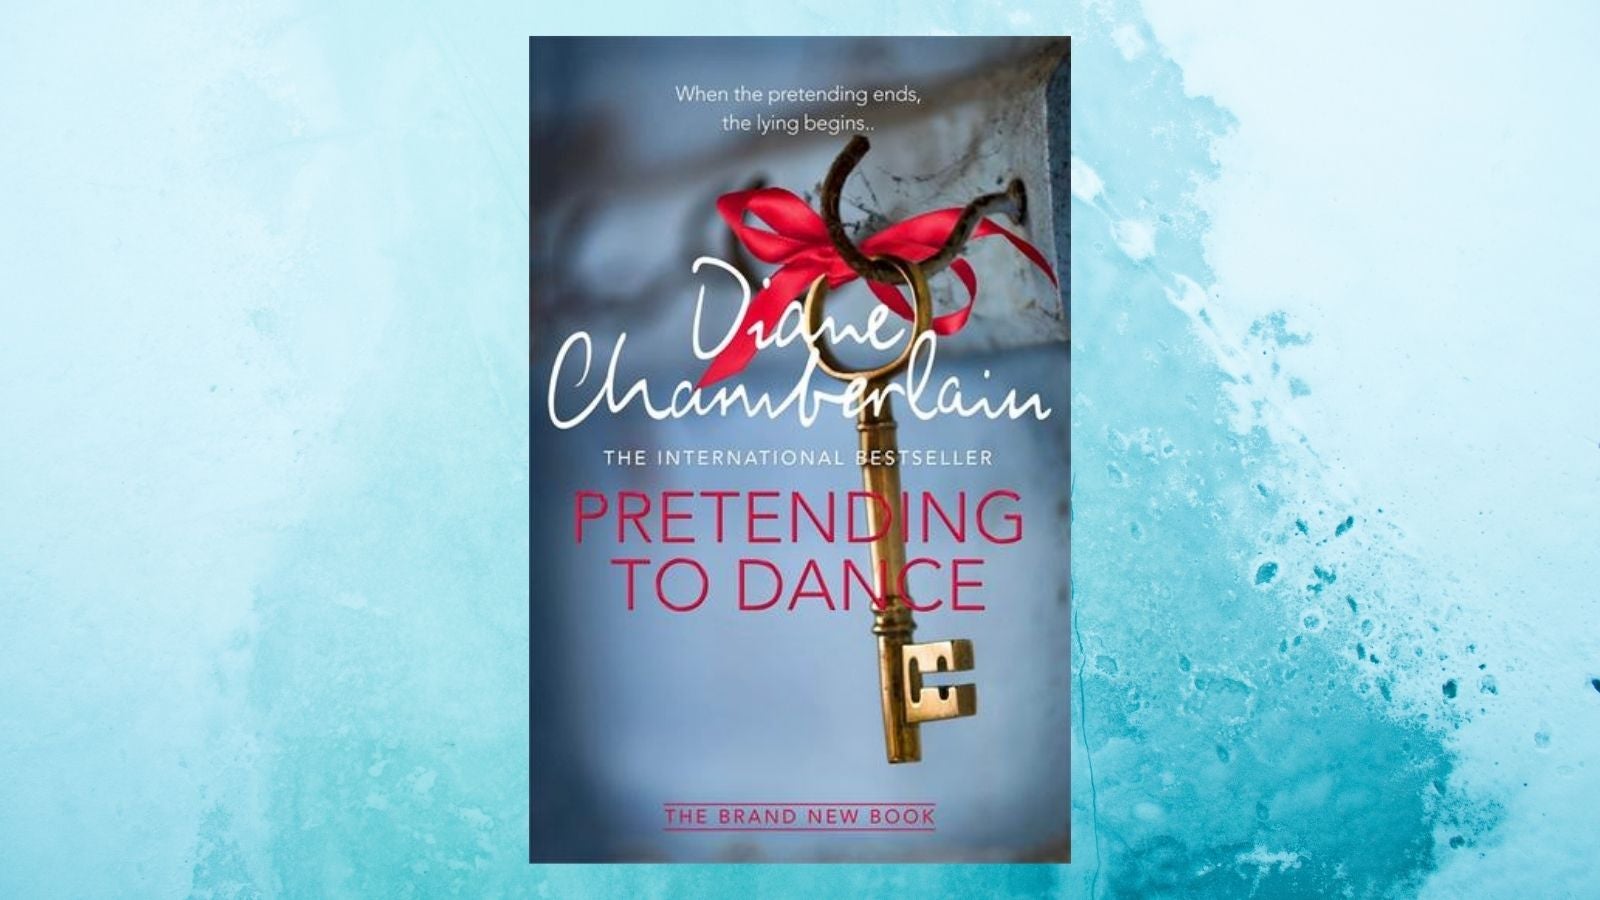 Diane Chamberlain Pretending to Dance book cover